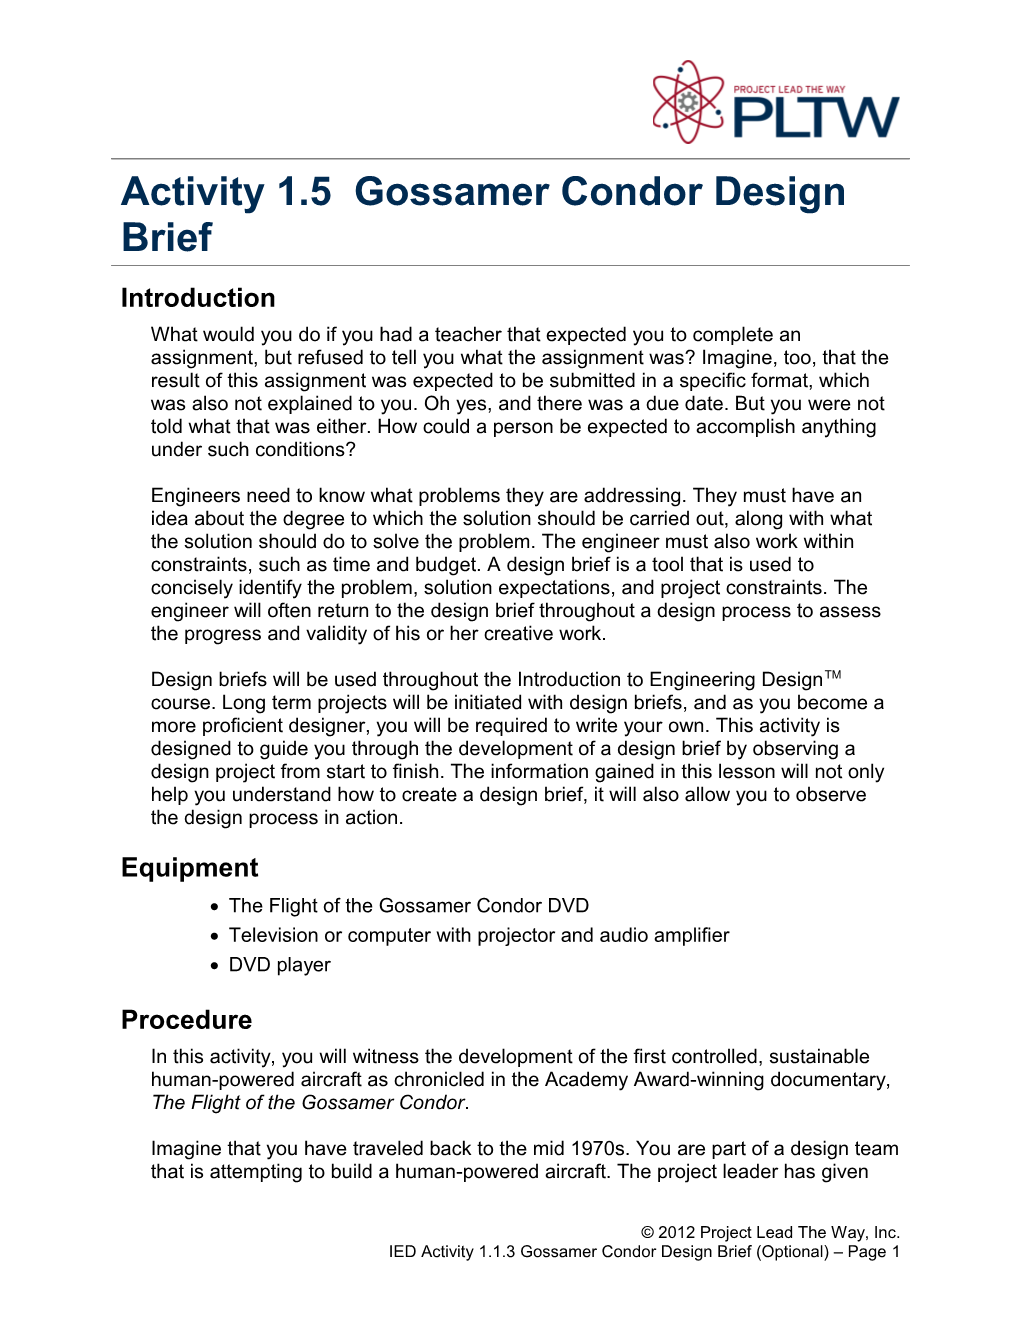 Activity 1.1.3:Gossamer Condor Design Brief